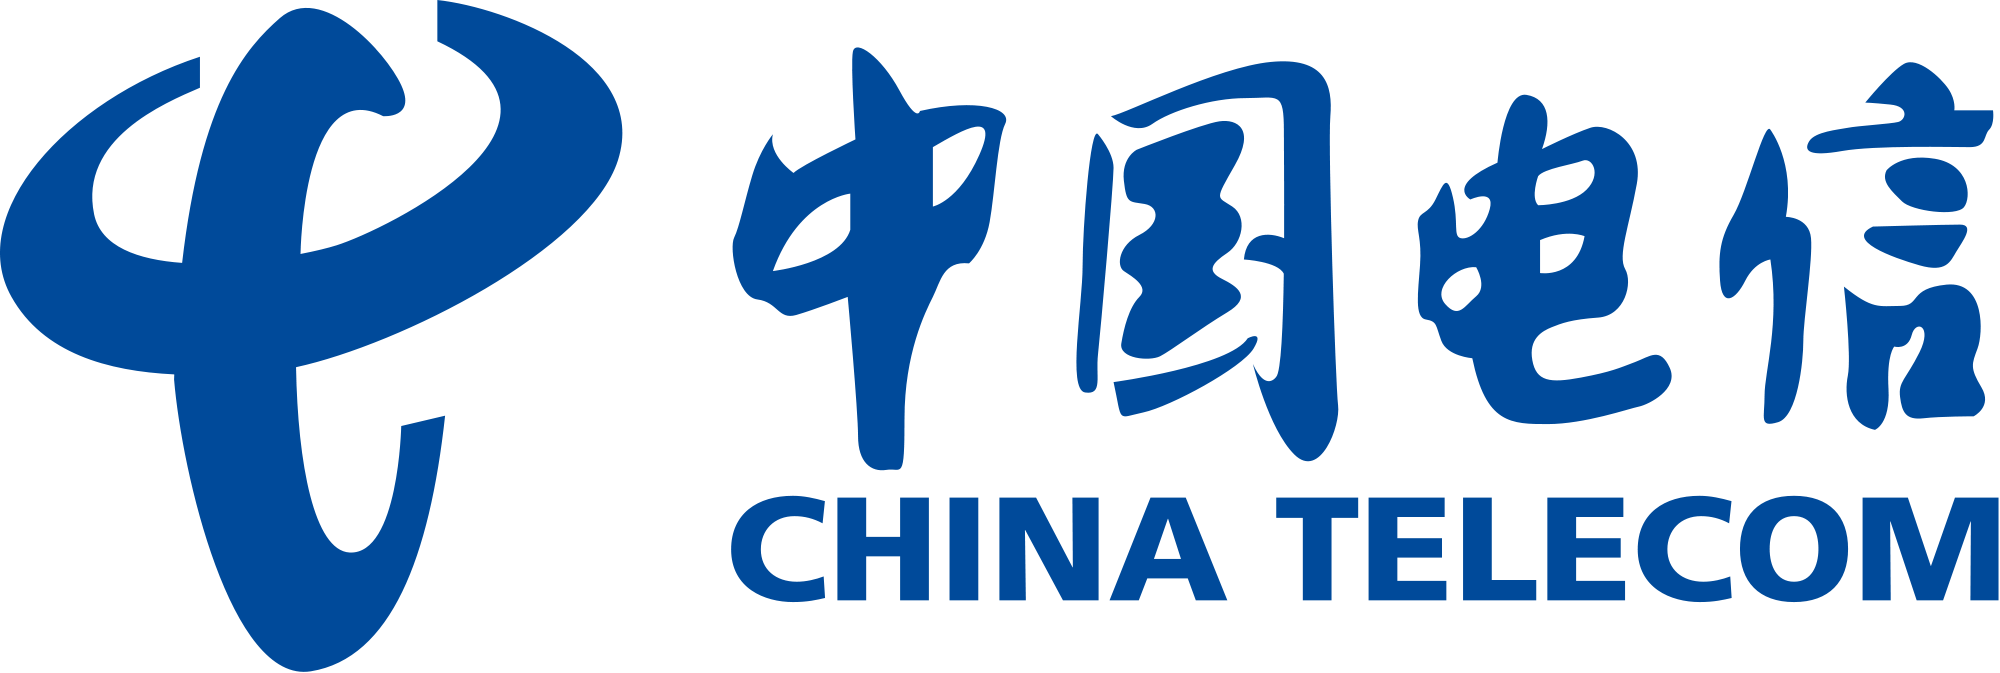 China Telecom - Чайна Телеком